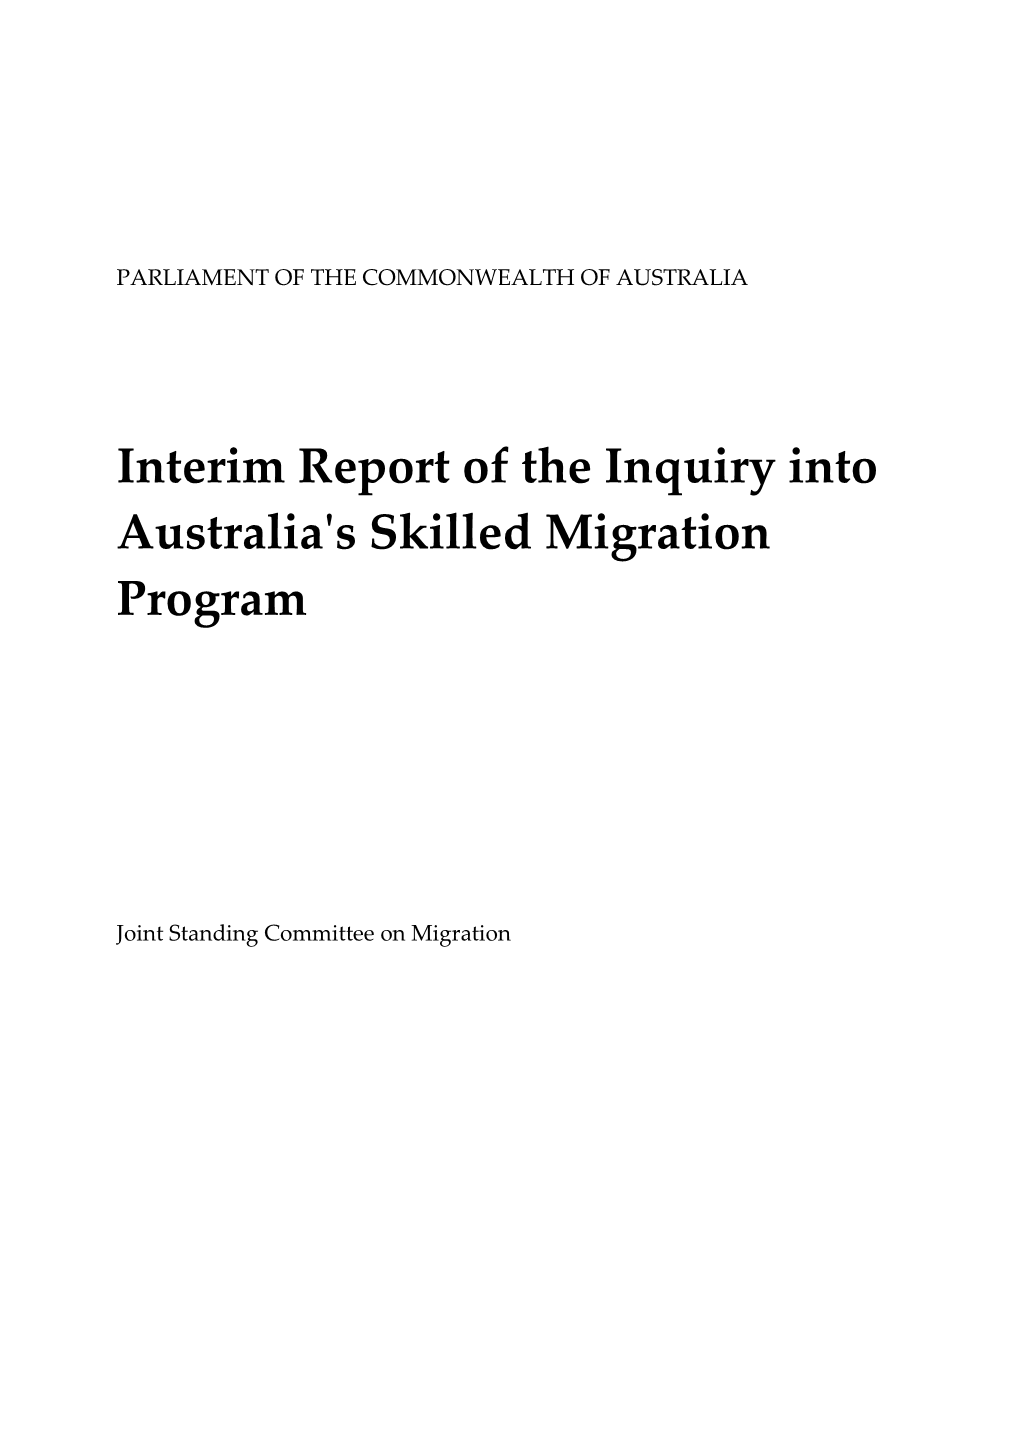 Interim Report of the Inquiry Into Australia's Skilled Migration Program